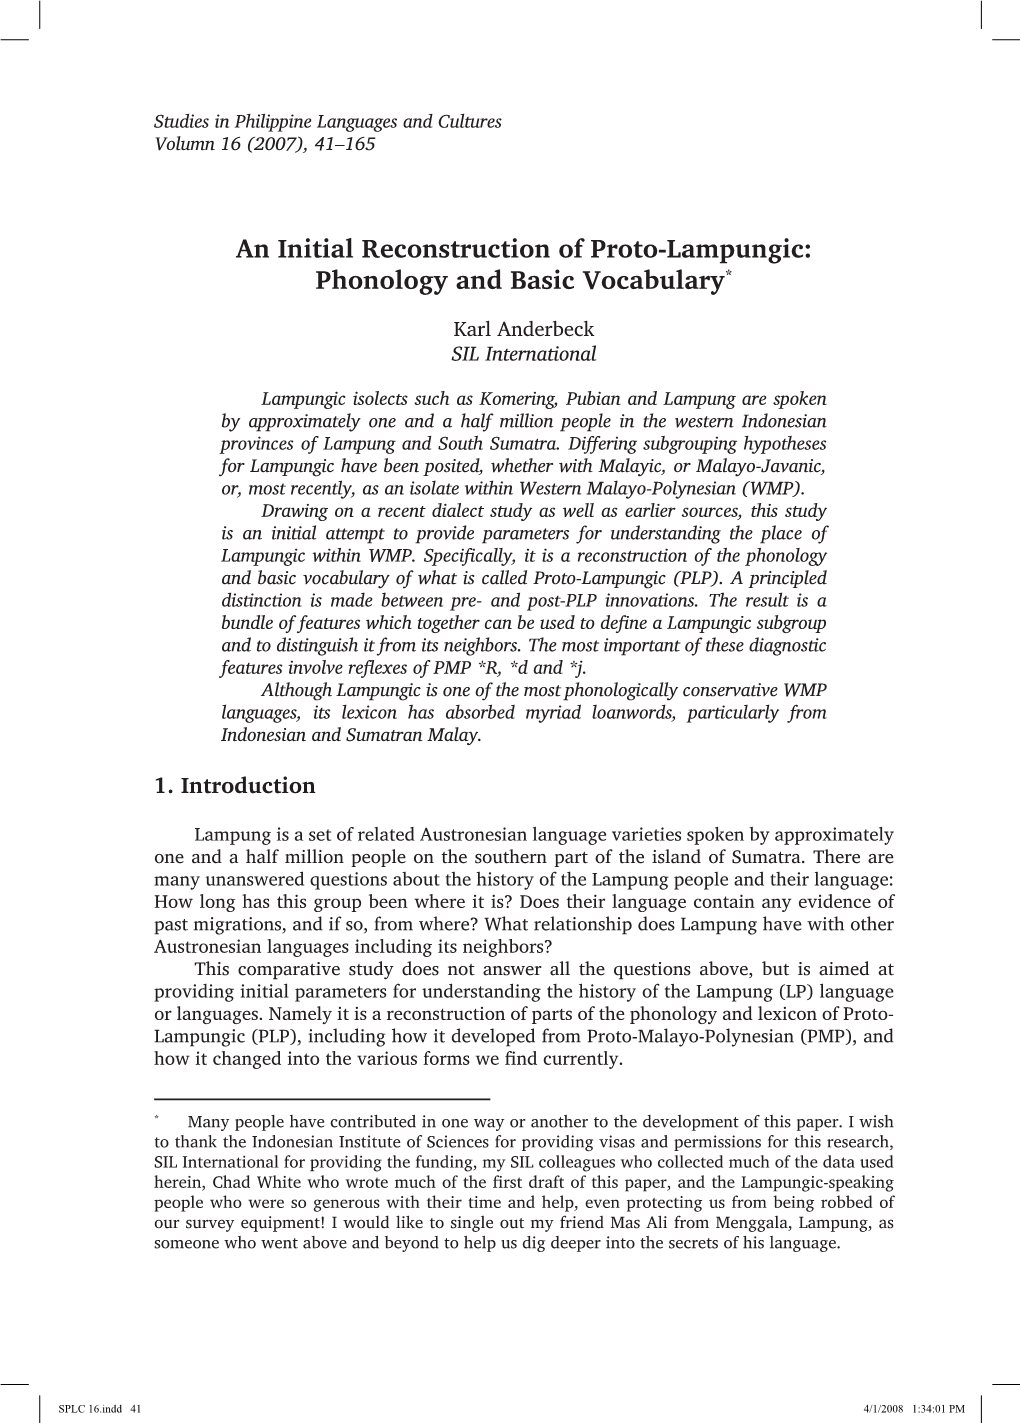 An Initial Reconstruction of Proto-Lampungic: Phonology and Basic Vocabulary*